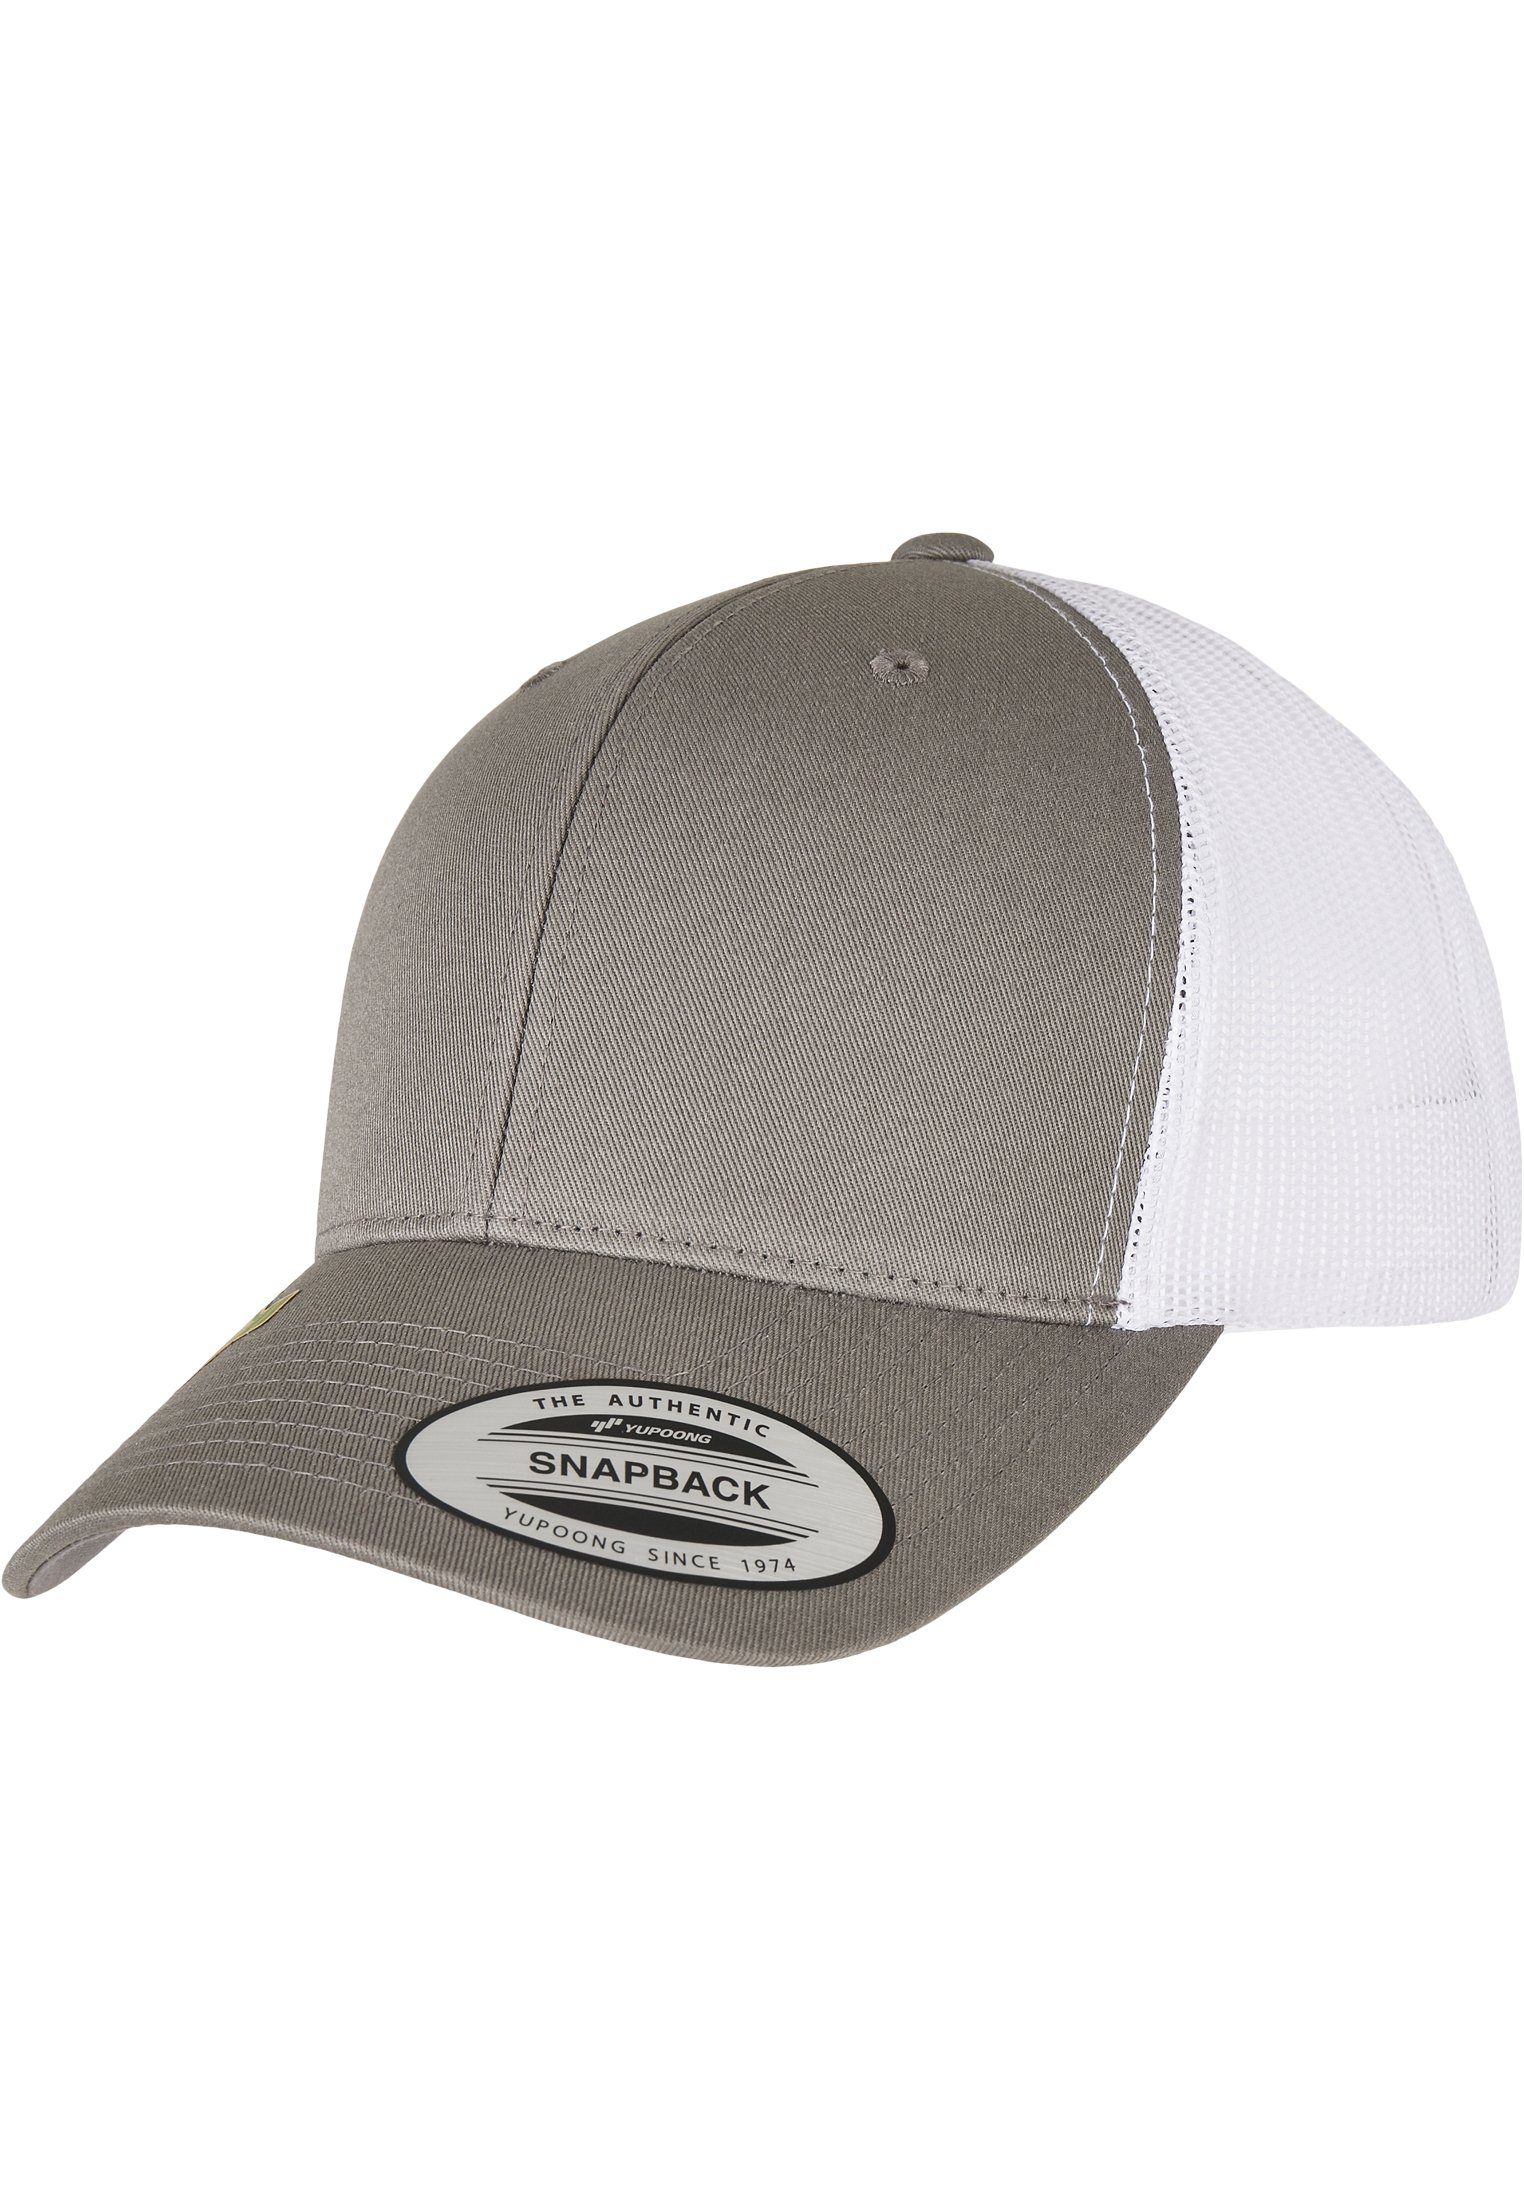 Flex CAP Cap Flexfit RECYCLED YP RETRO Caps 2-TONE CLASSICS grey/white TRUCKER